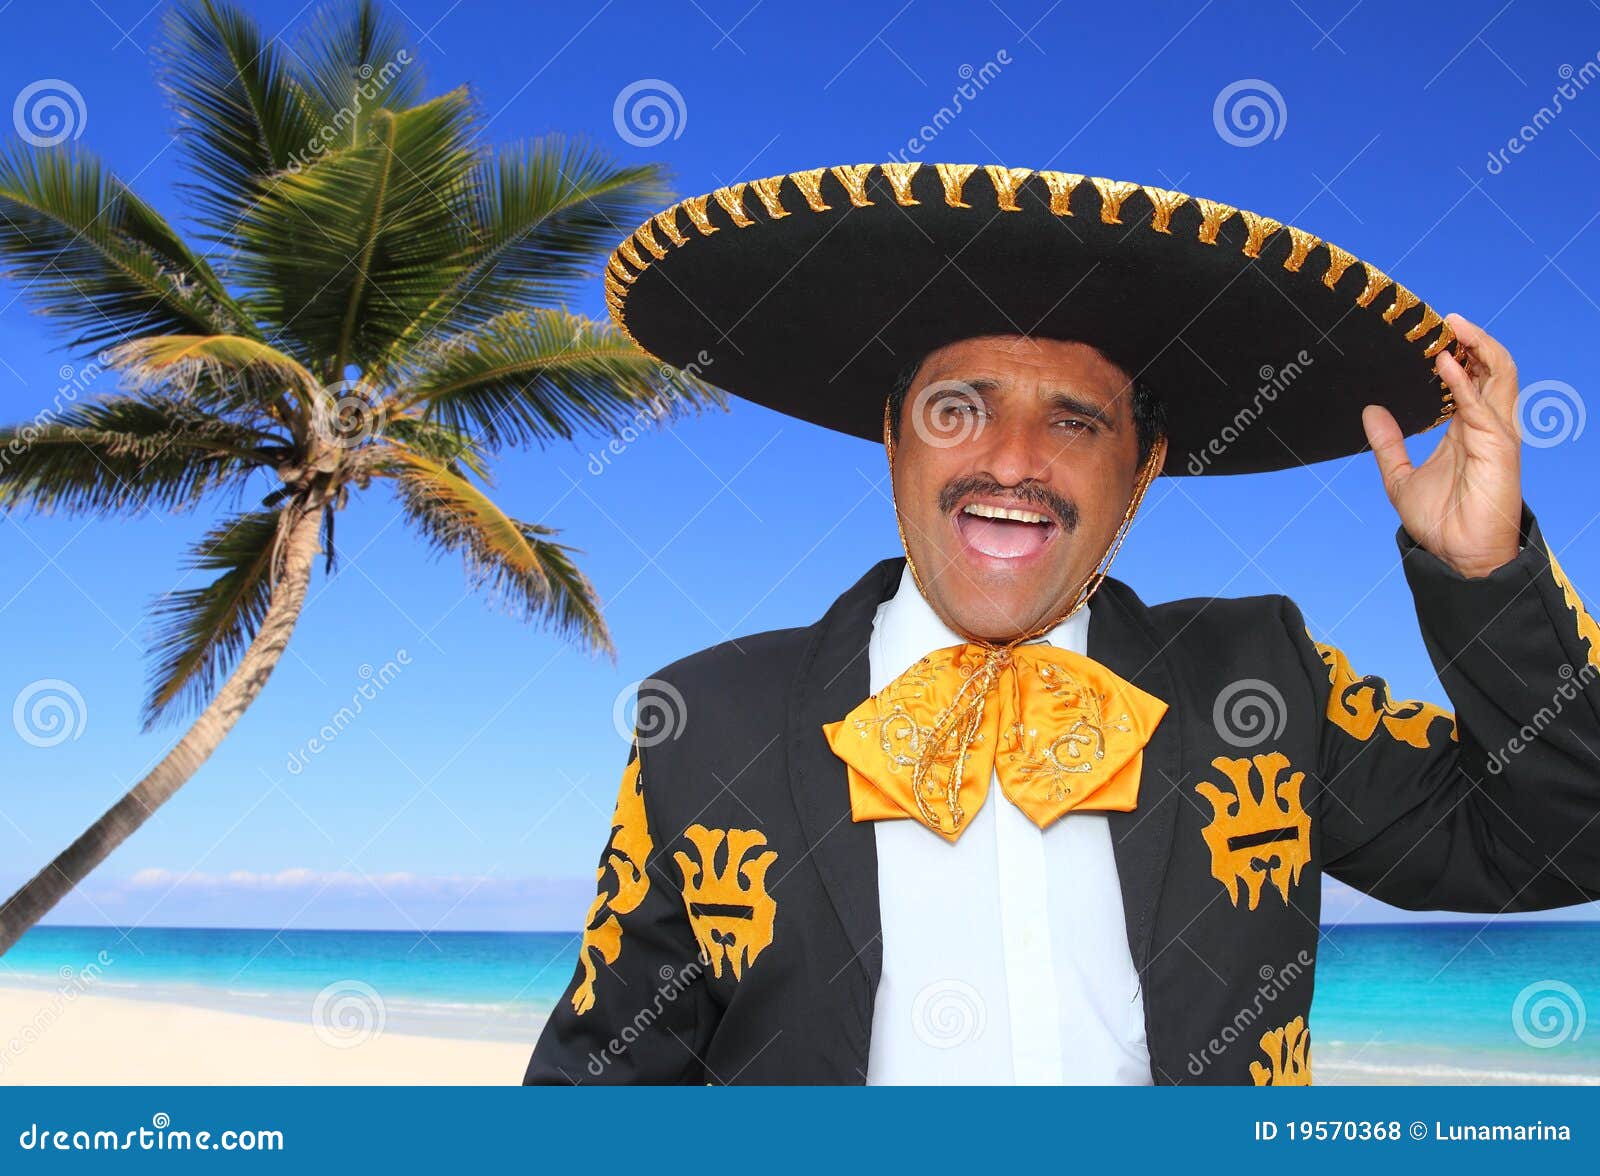 charro mariachi singing shout in mexico beach